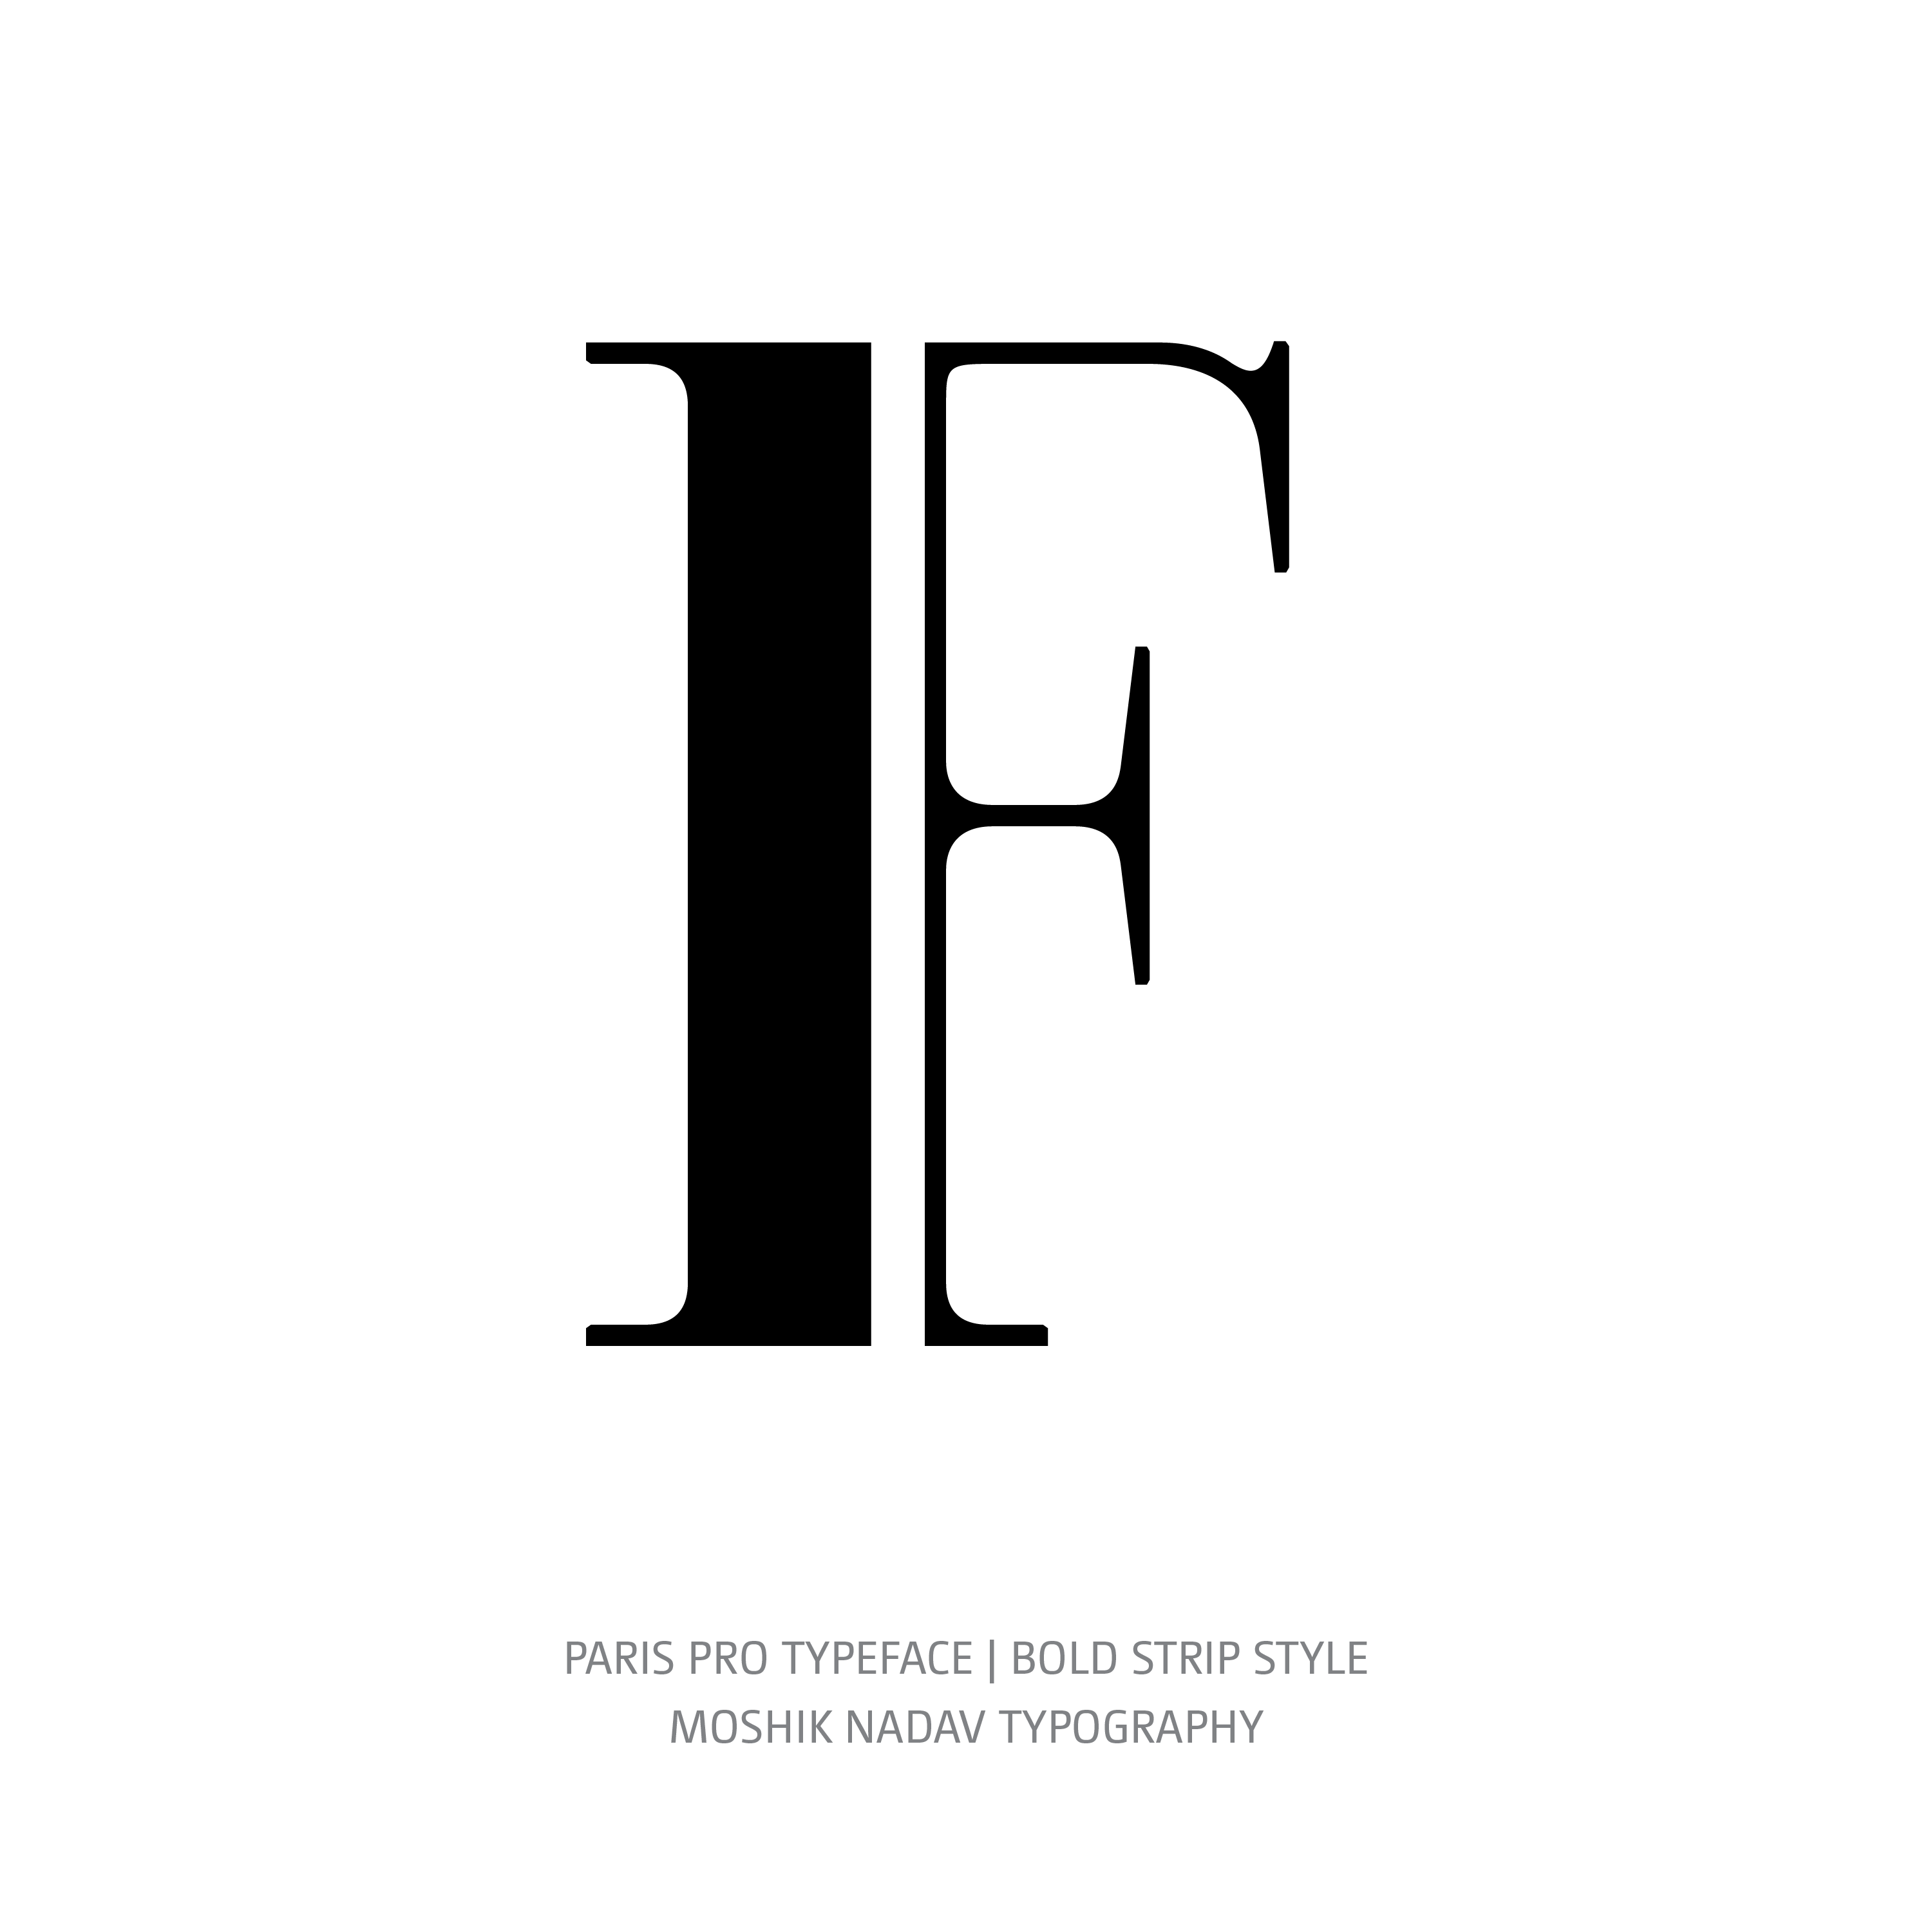 Paris Pro Typeface Bold Strip F